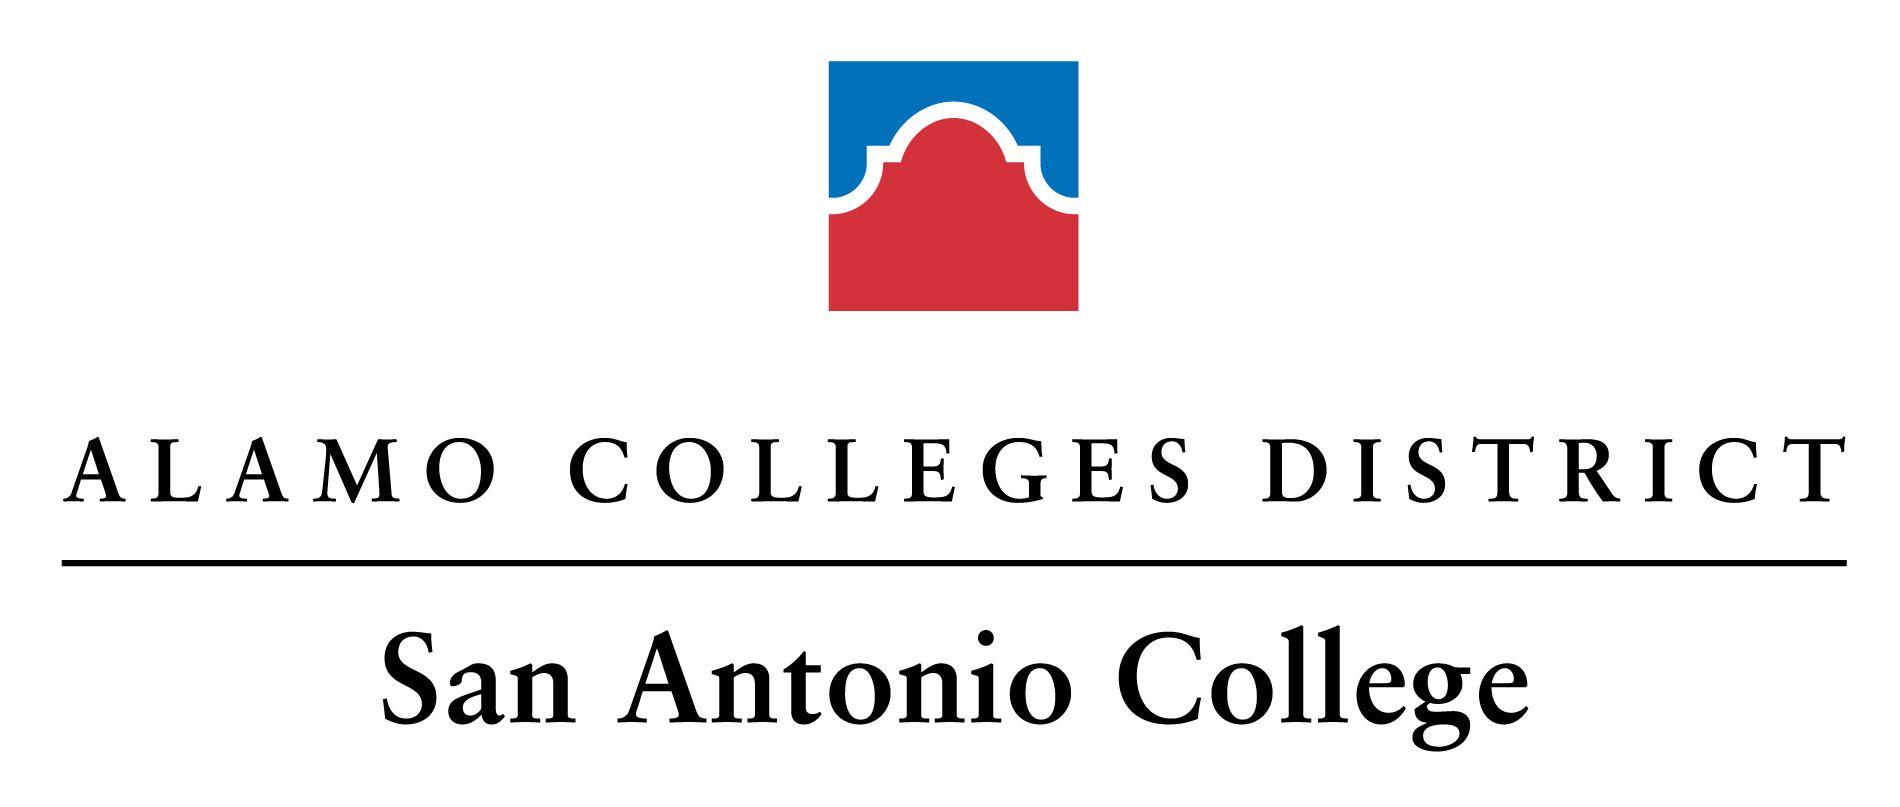 Antonio Logo - SAC : News and Events : Media : Logos